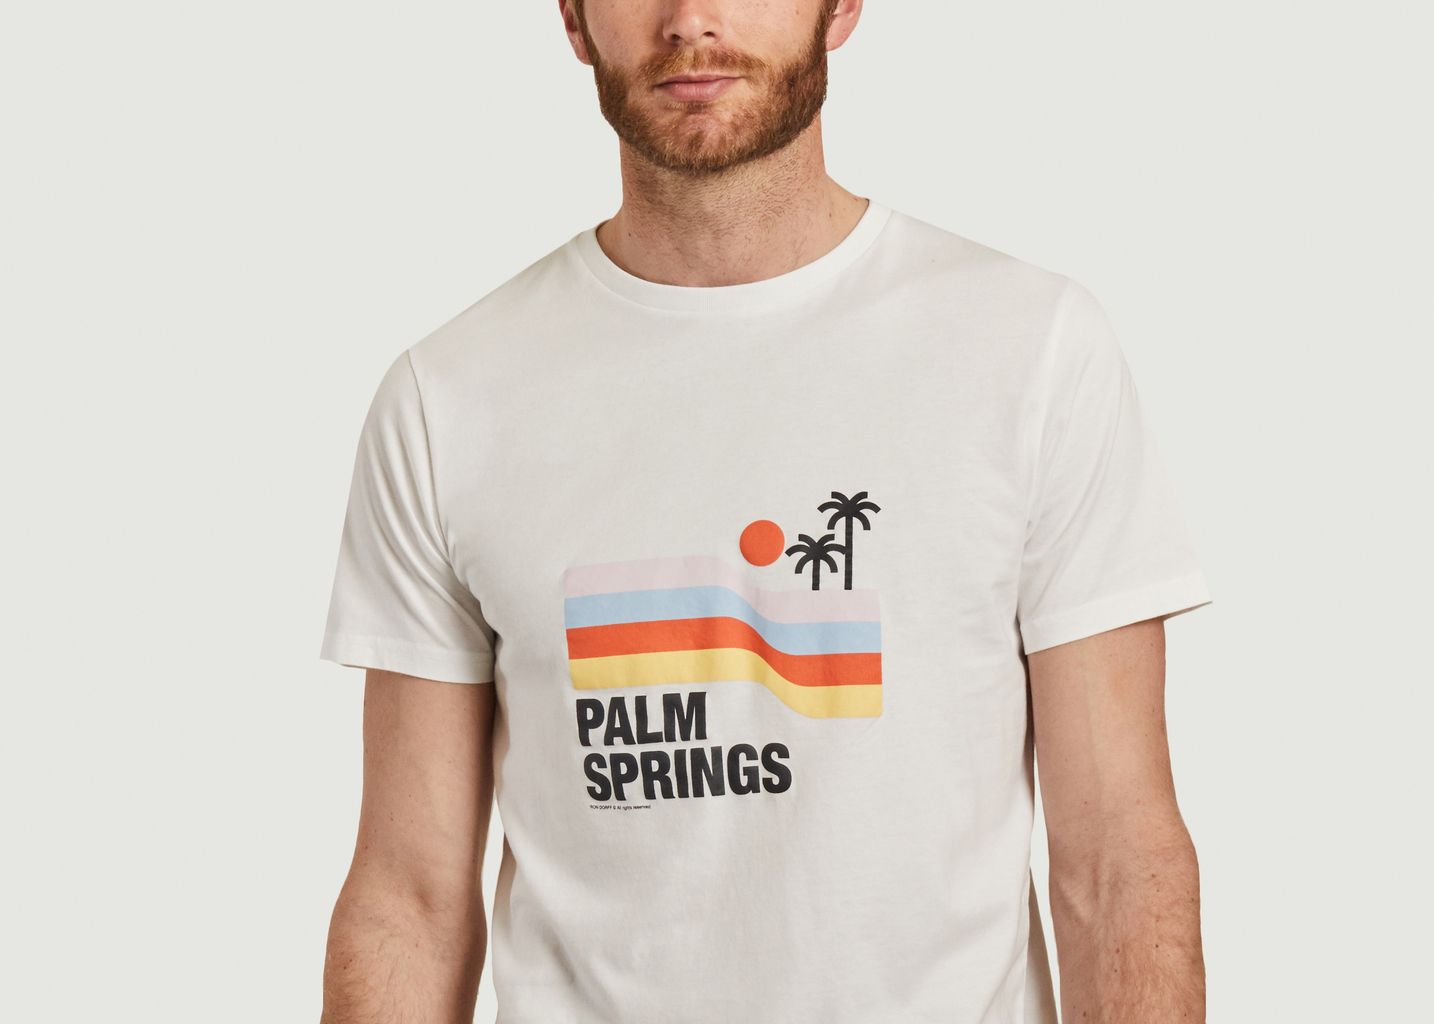 Palm springs t-shirt - Ron Dorff